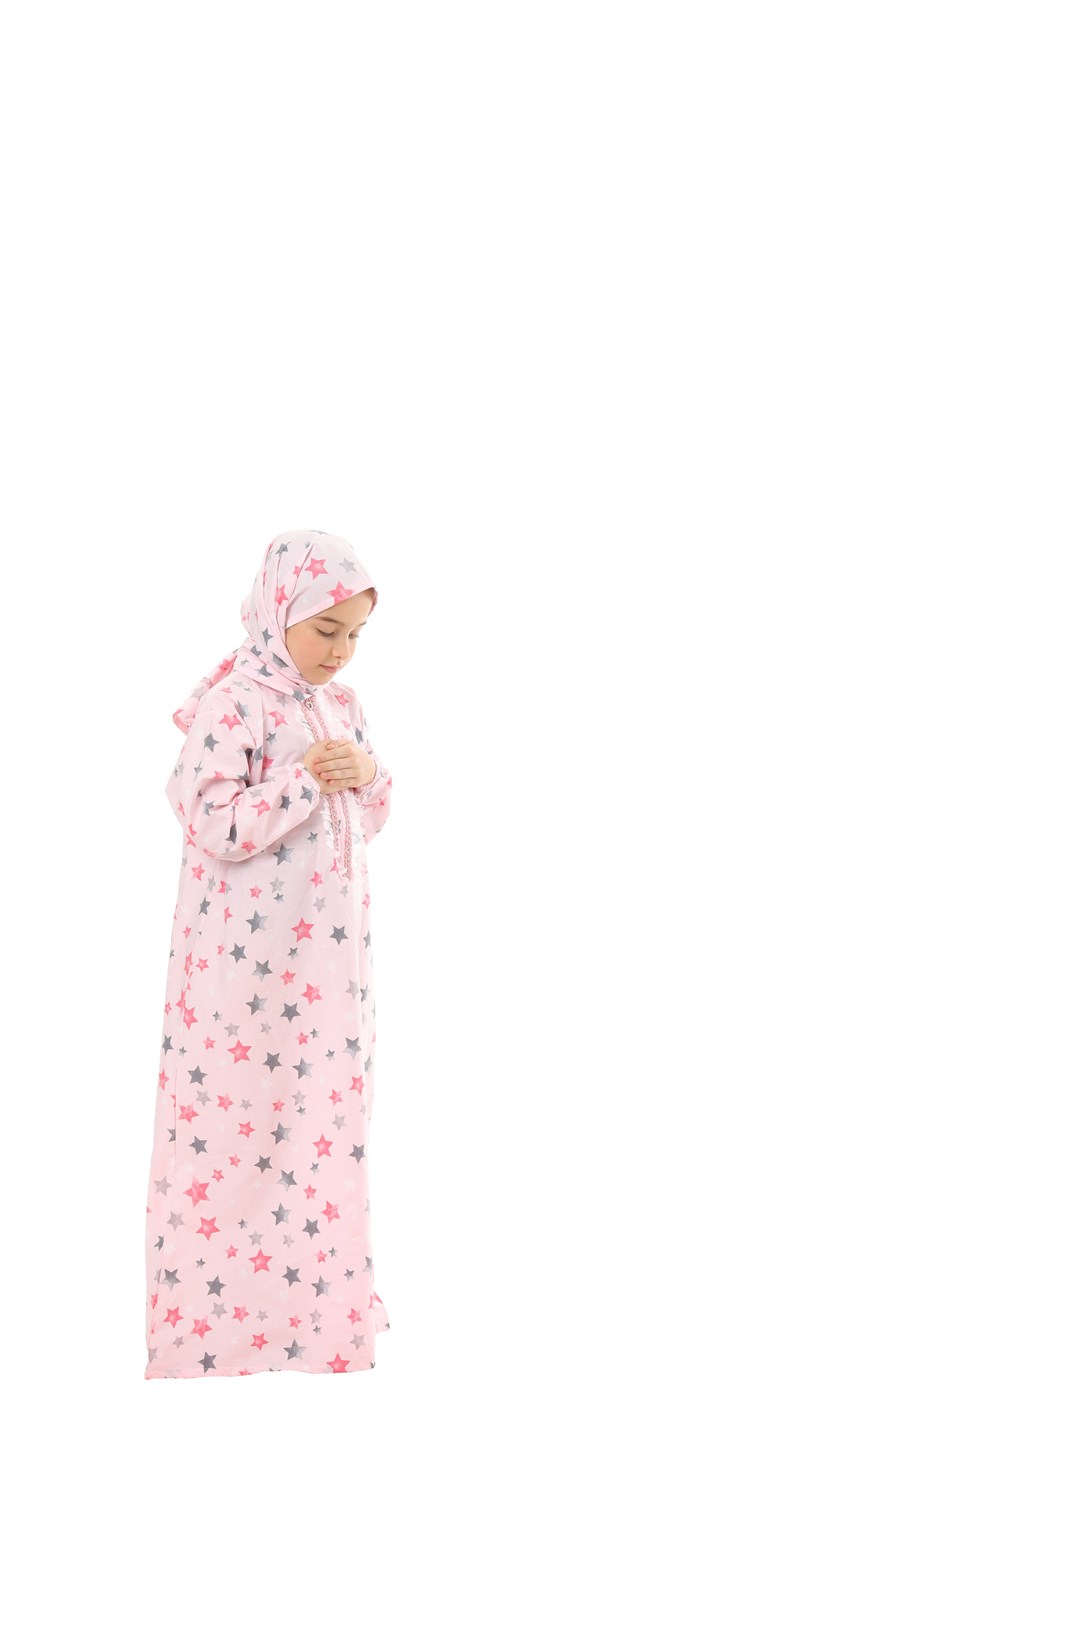 Practical Zippered Cotton Girls' Prayer Dress Pink Printed